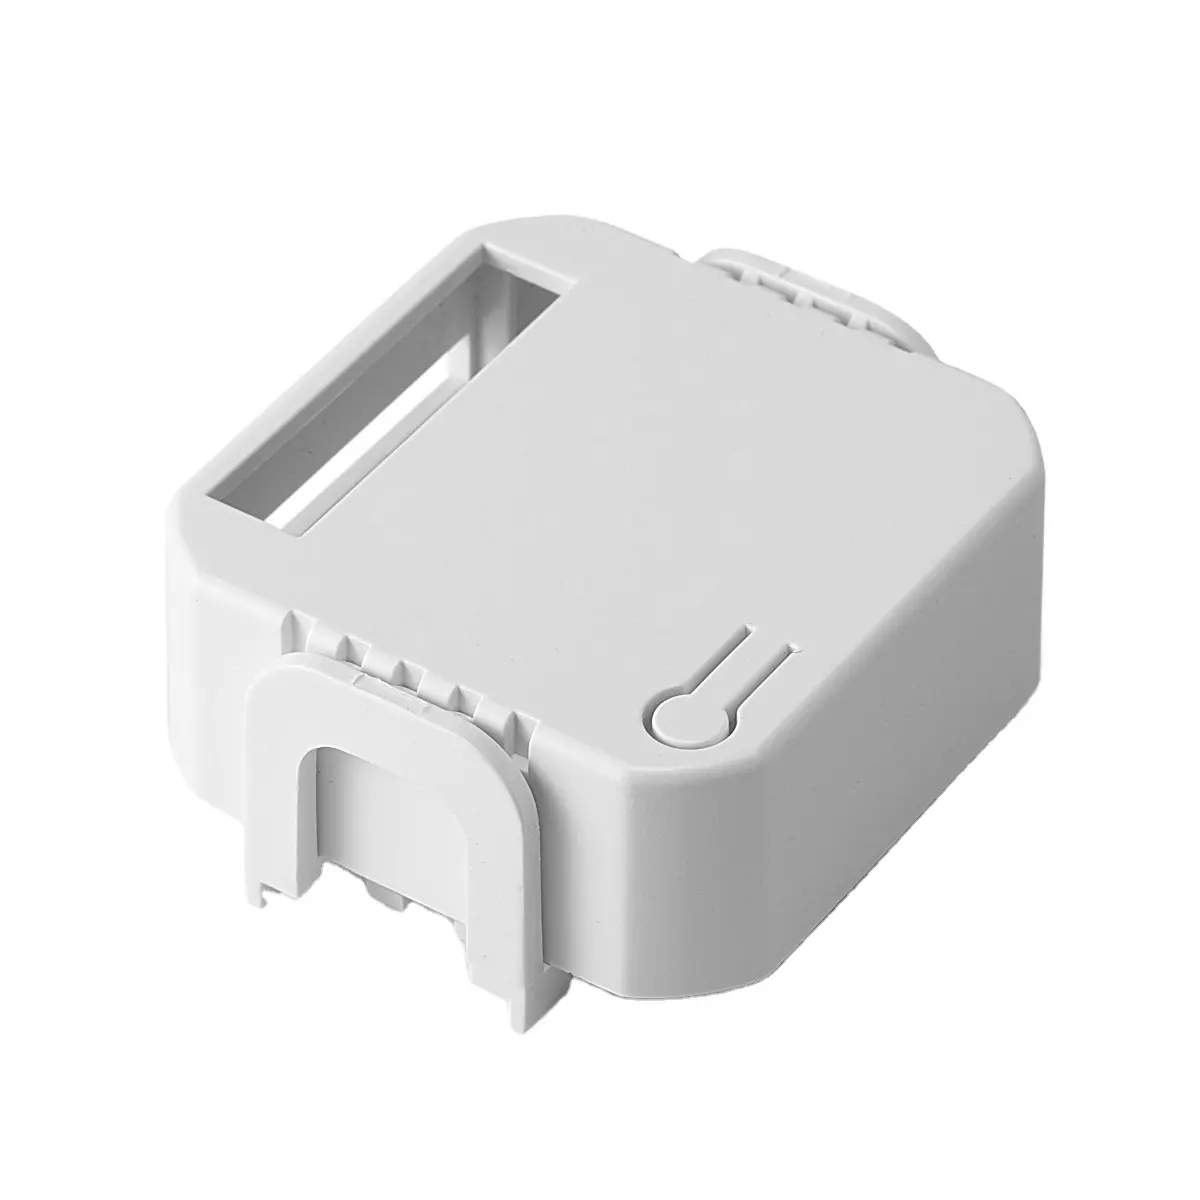 50*45*22mm Smart Home interruttore senza fili luce interruttore telecomando scatola telecomando relè Controller ABS custodia in plastica